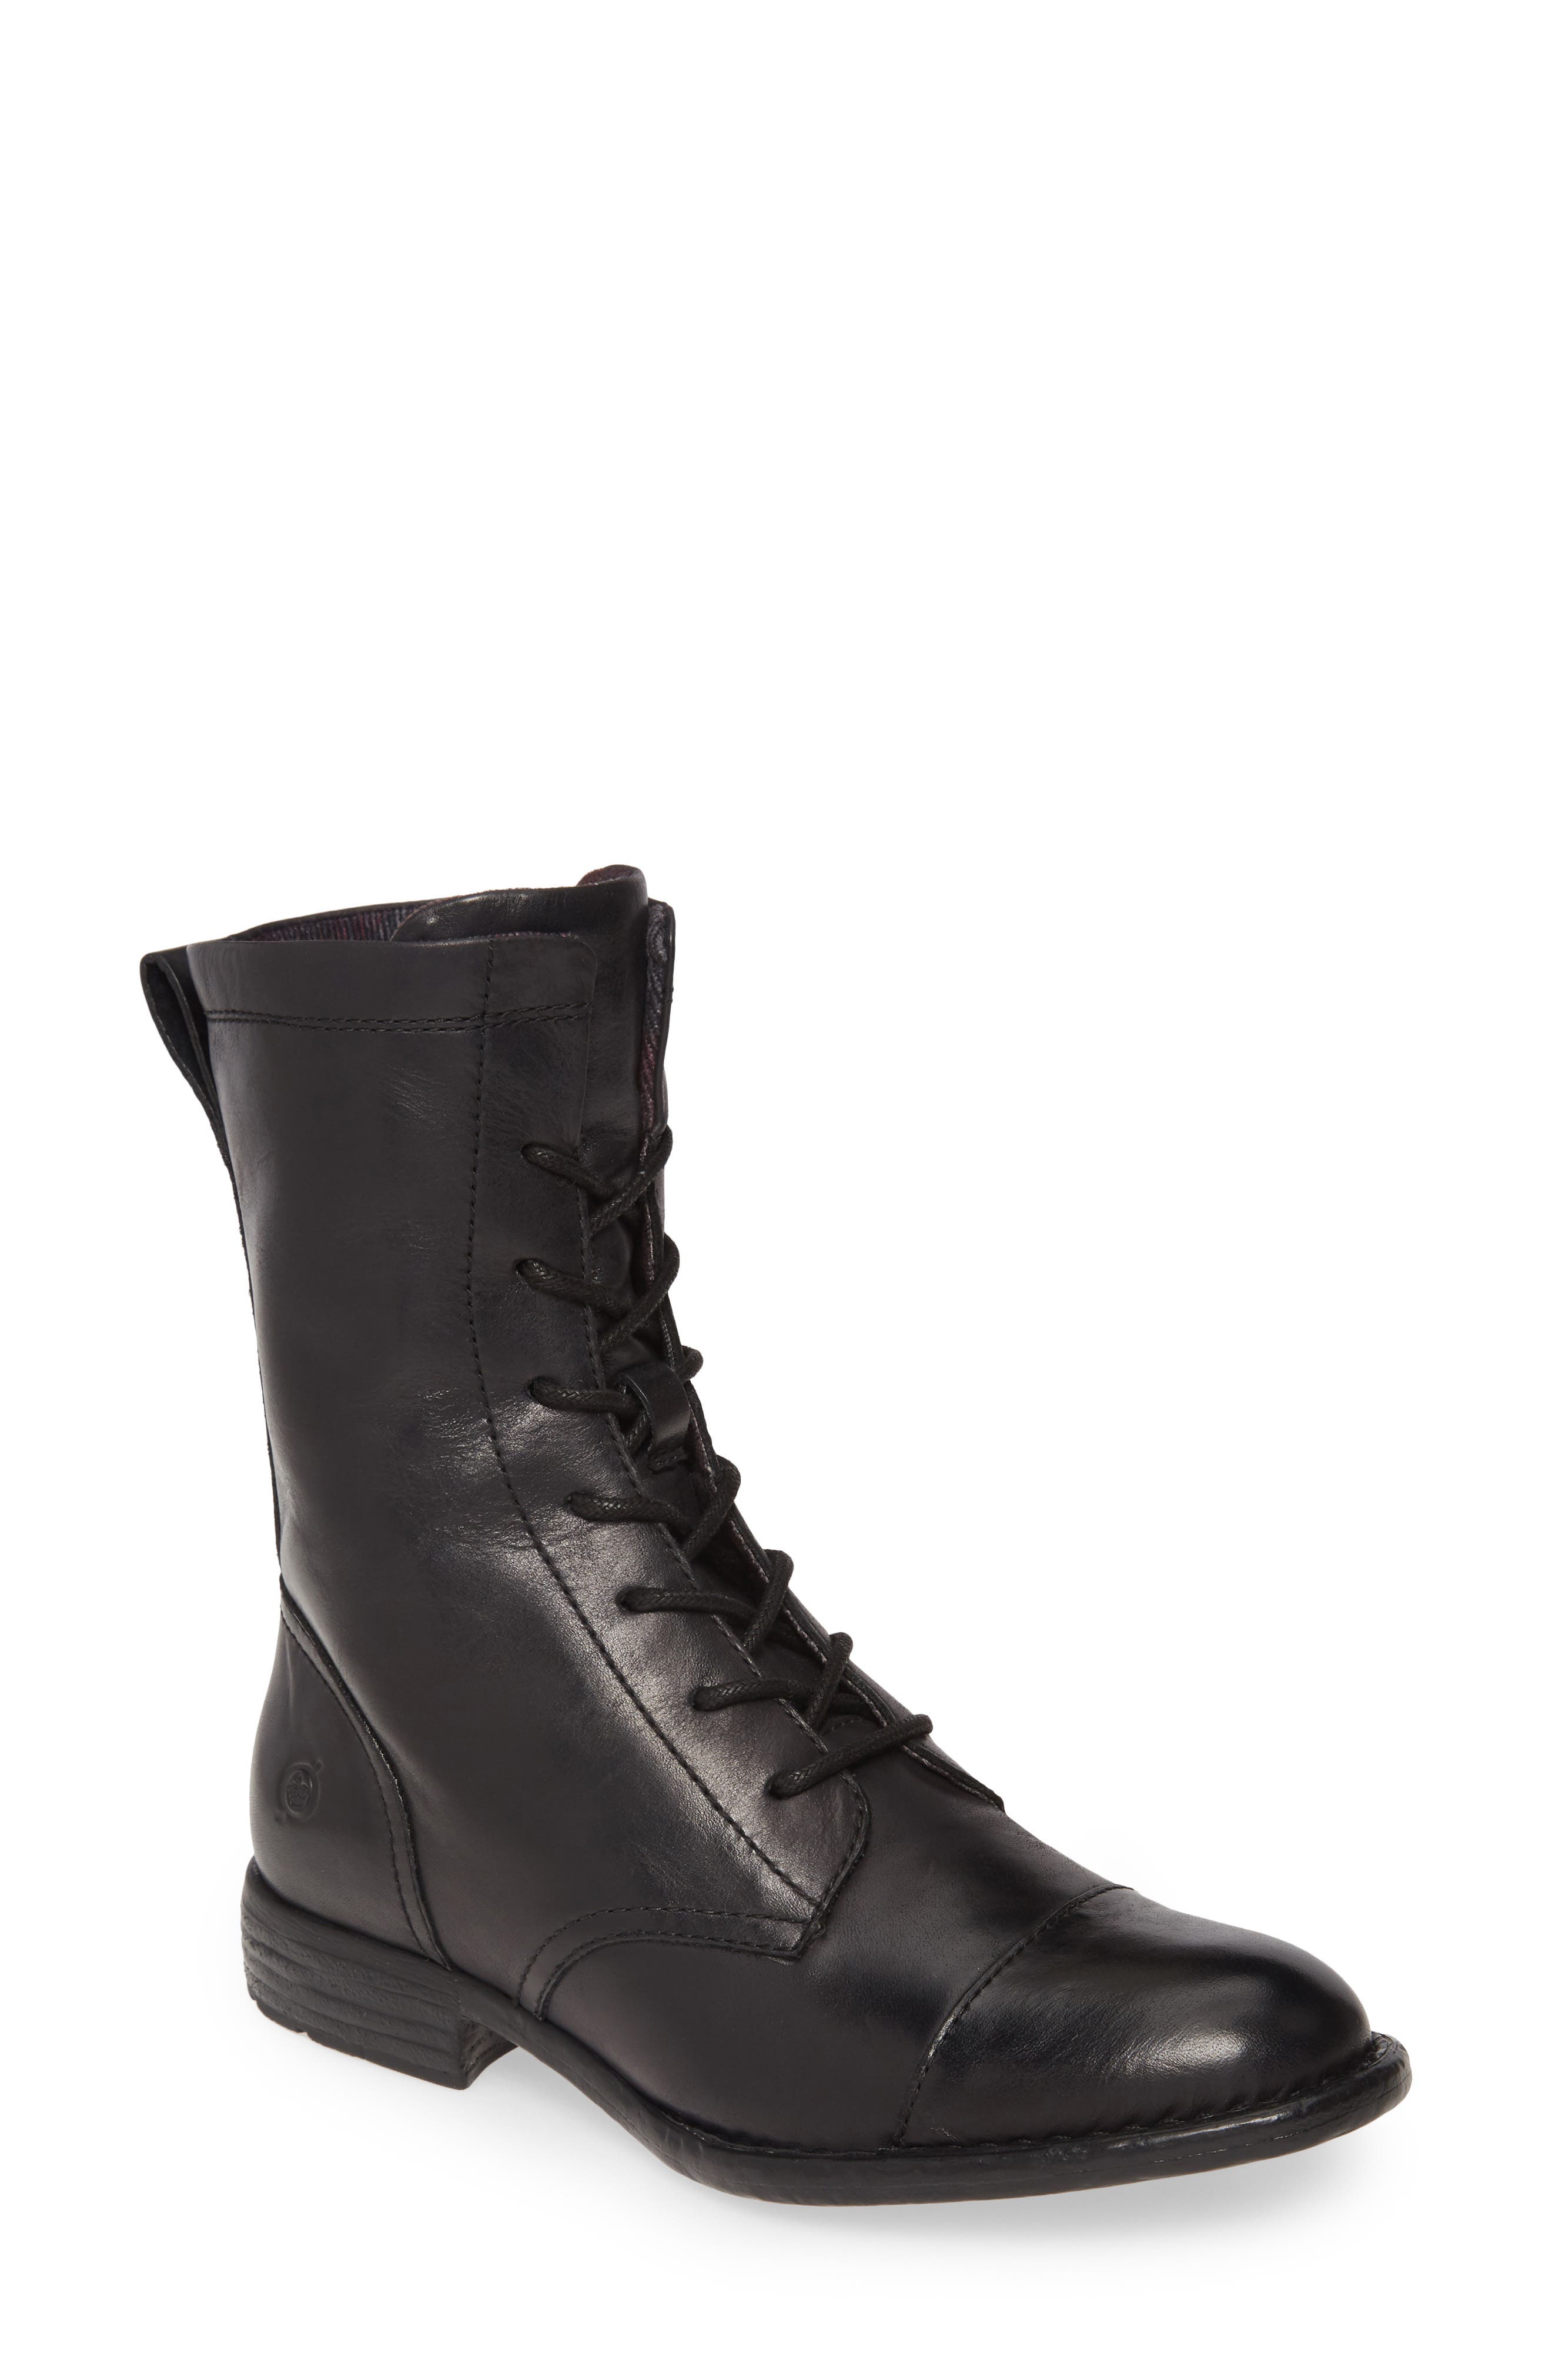 born black boots nordstrom